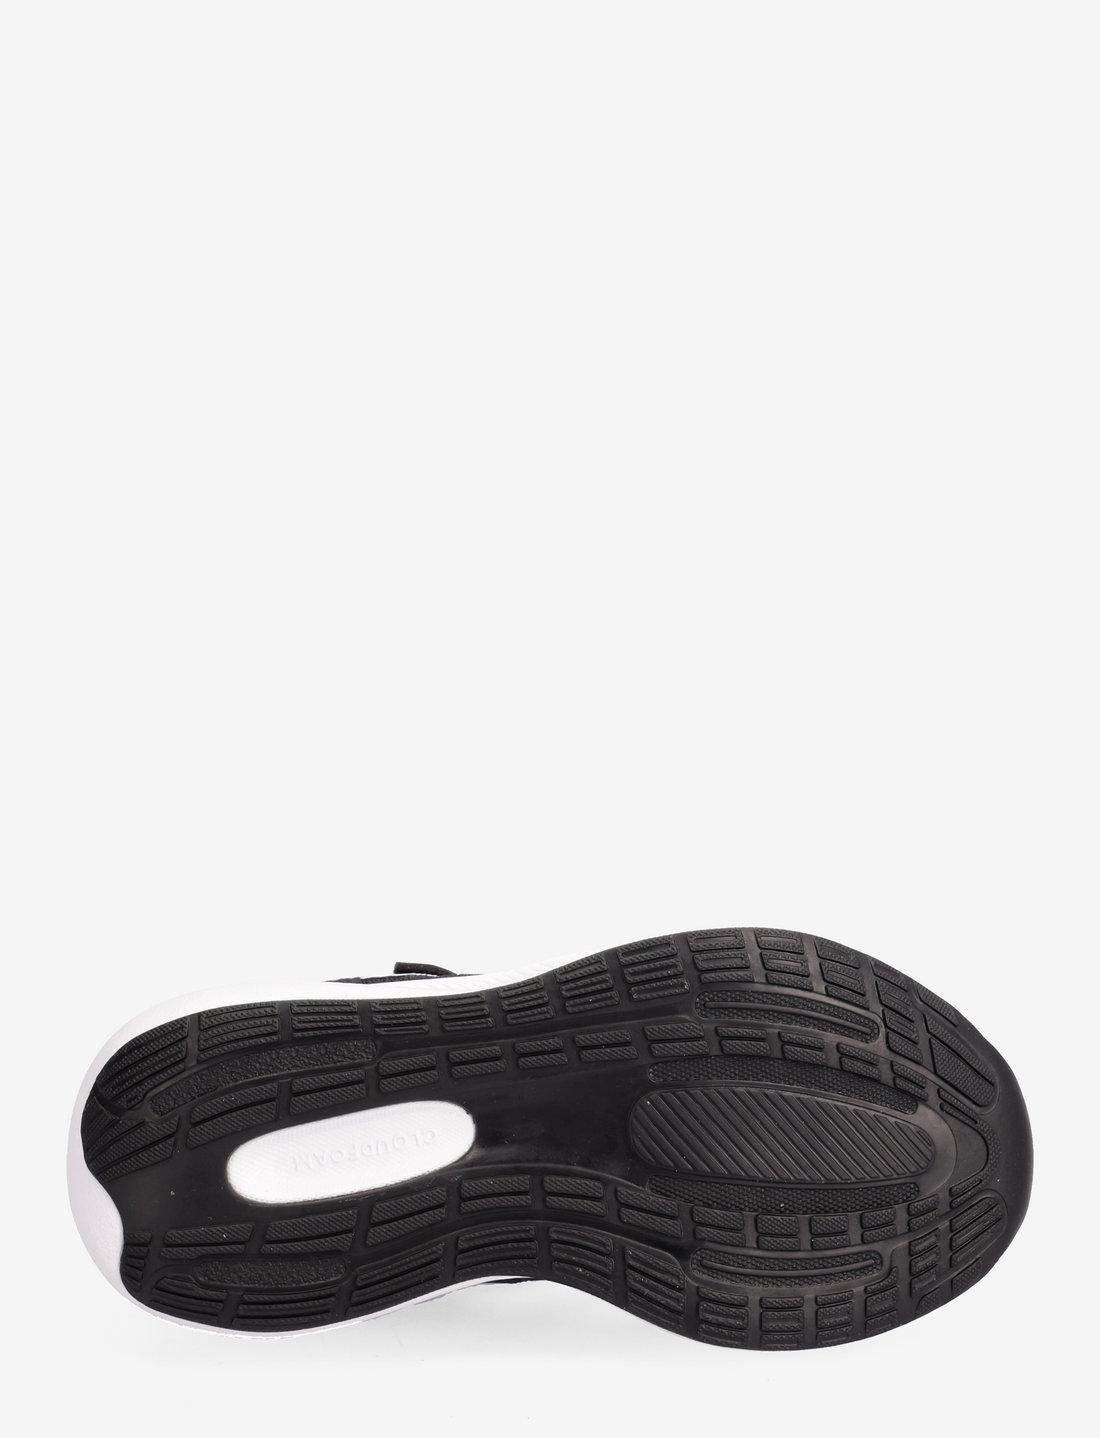 adidas Performance Runfalcon 3.0 Elastic Lace Top Strap Shoes (Cblack /ftwwht/cblack) – 45 € –